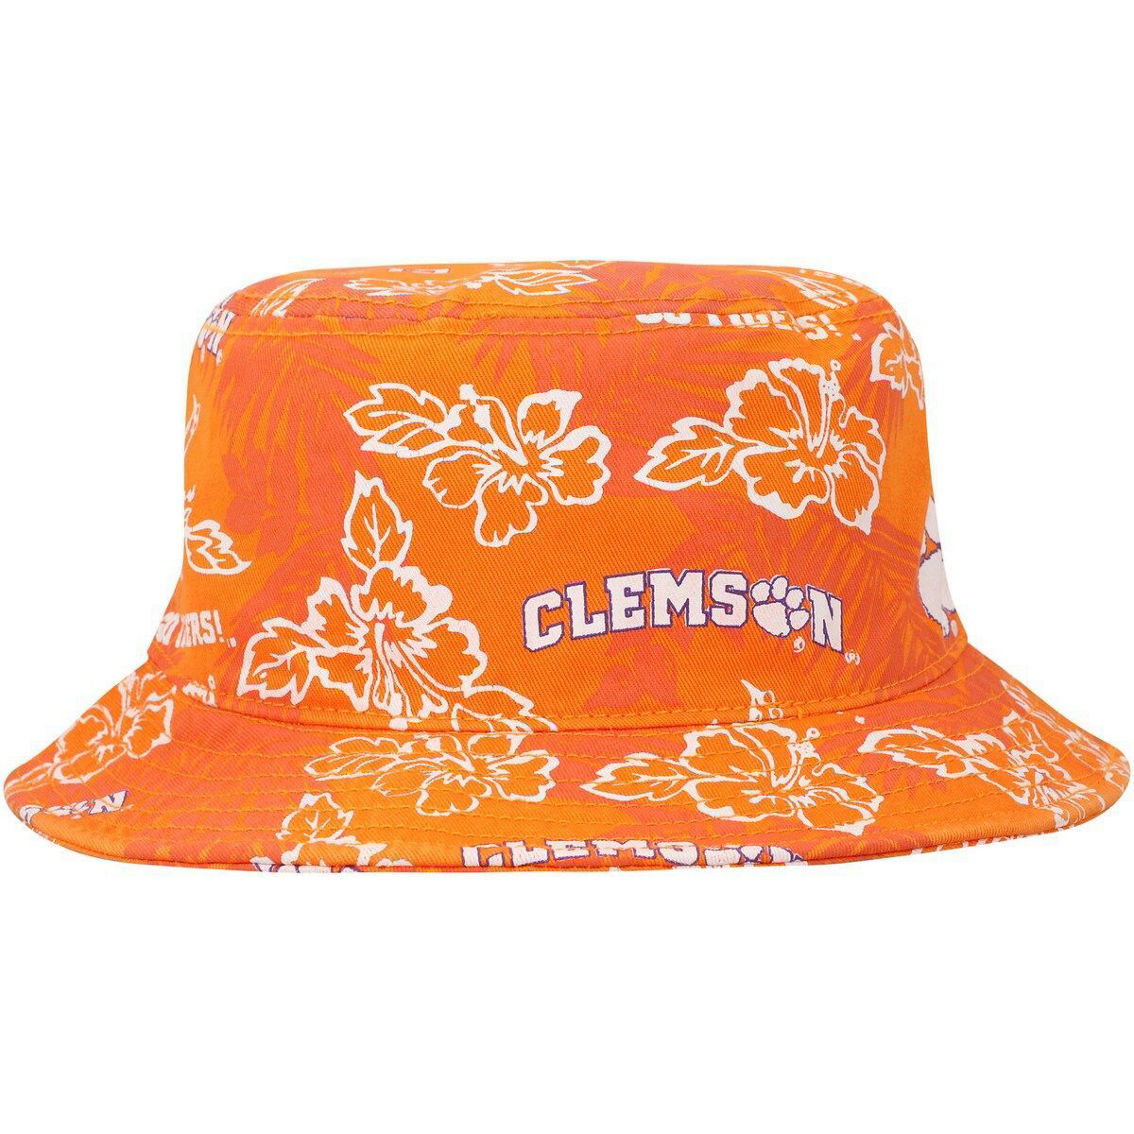 Reyn Spooner Men's Orange Clemson Tigers Floral Bucket Hat - Image 3 of 3